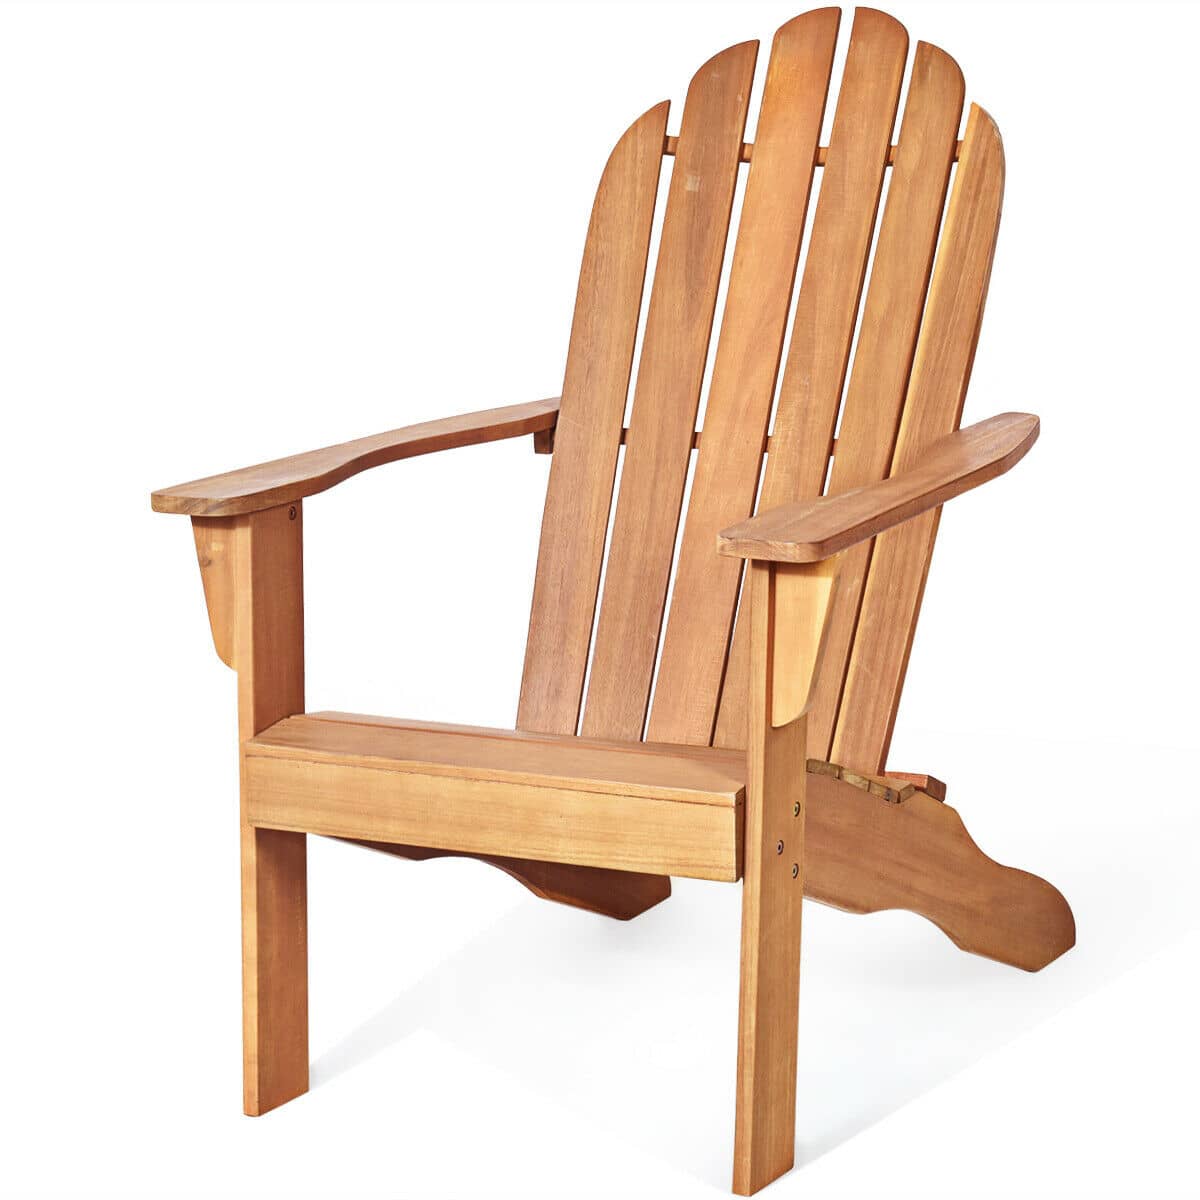 CASAINC Wooden Outdoor Lounge Chair with Ergonomic Design for Yard and Garden-Casainc Canada